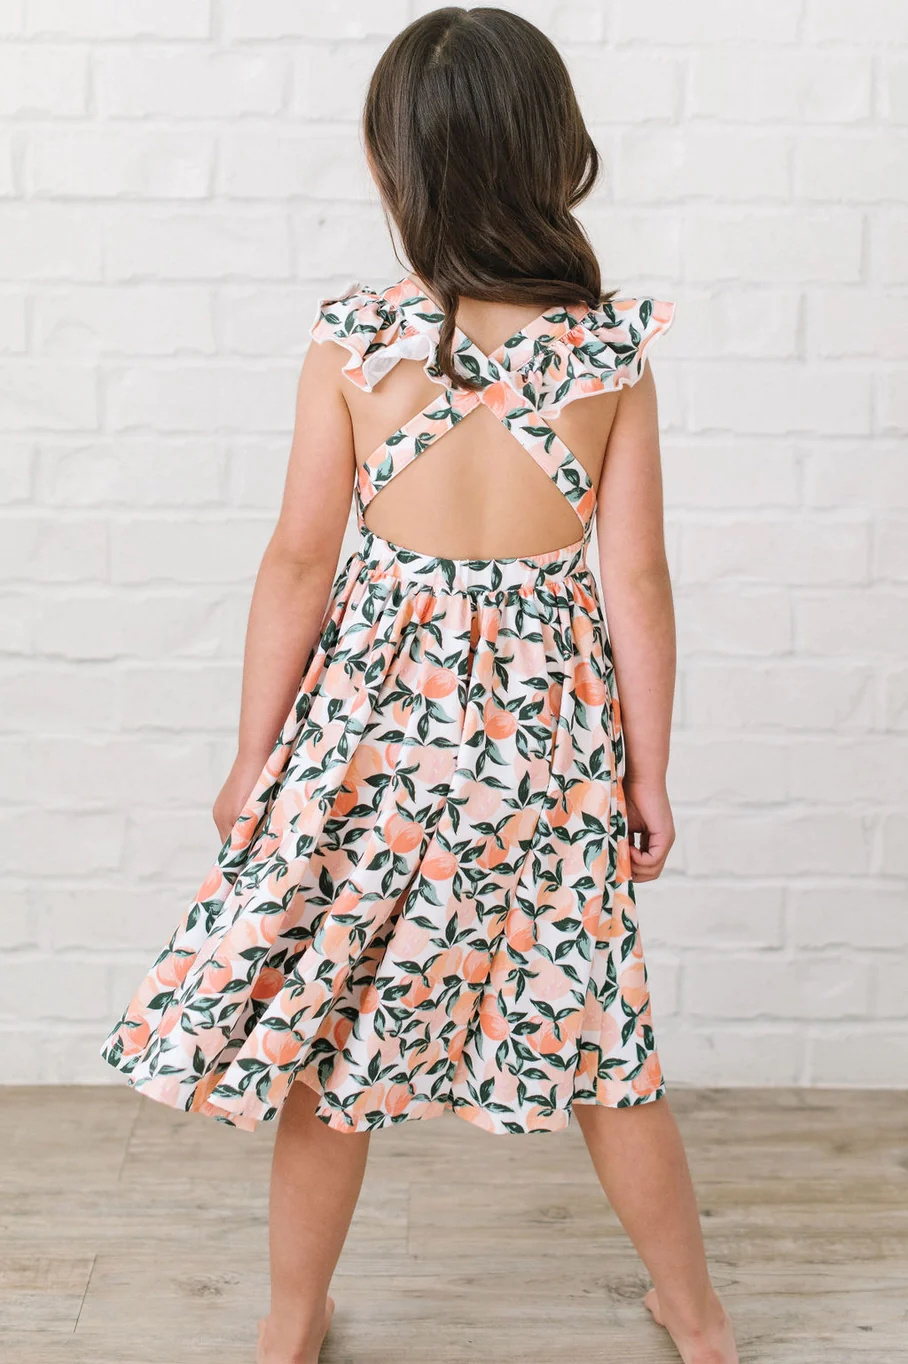 Ollie Jay Rosita Dress Peachy Paradise